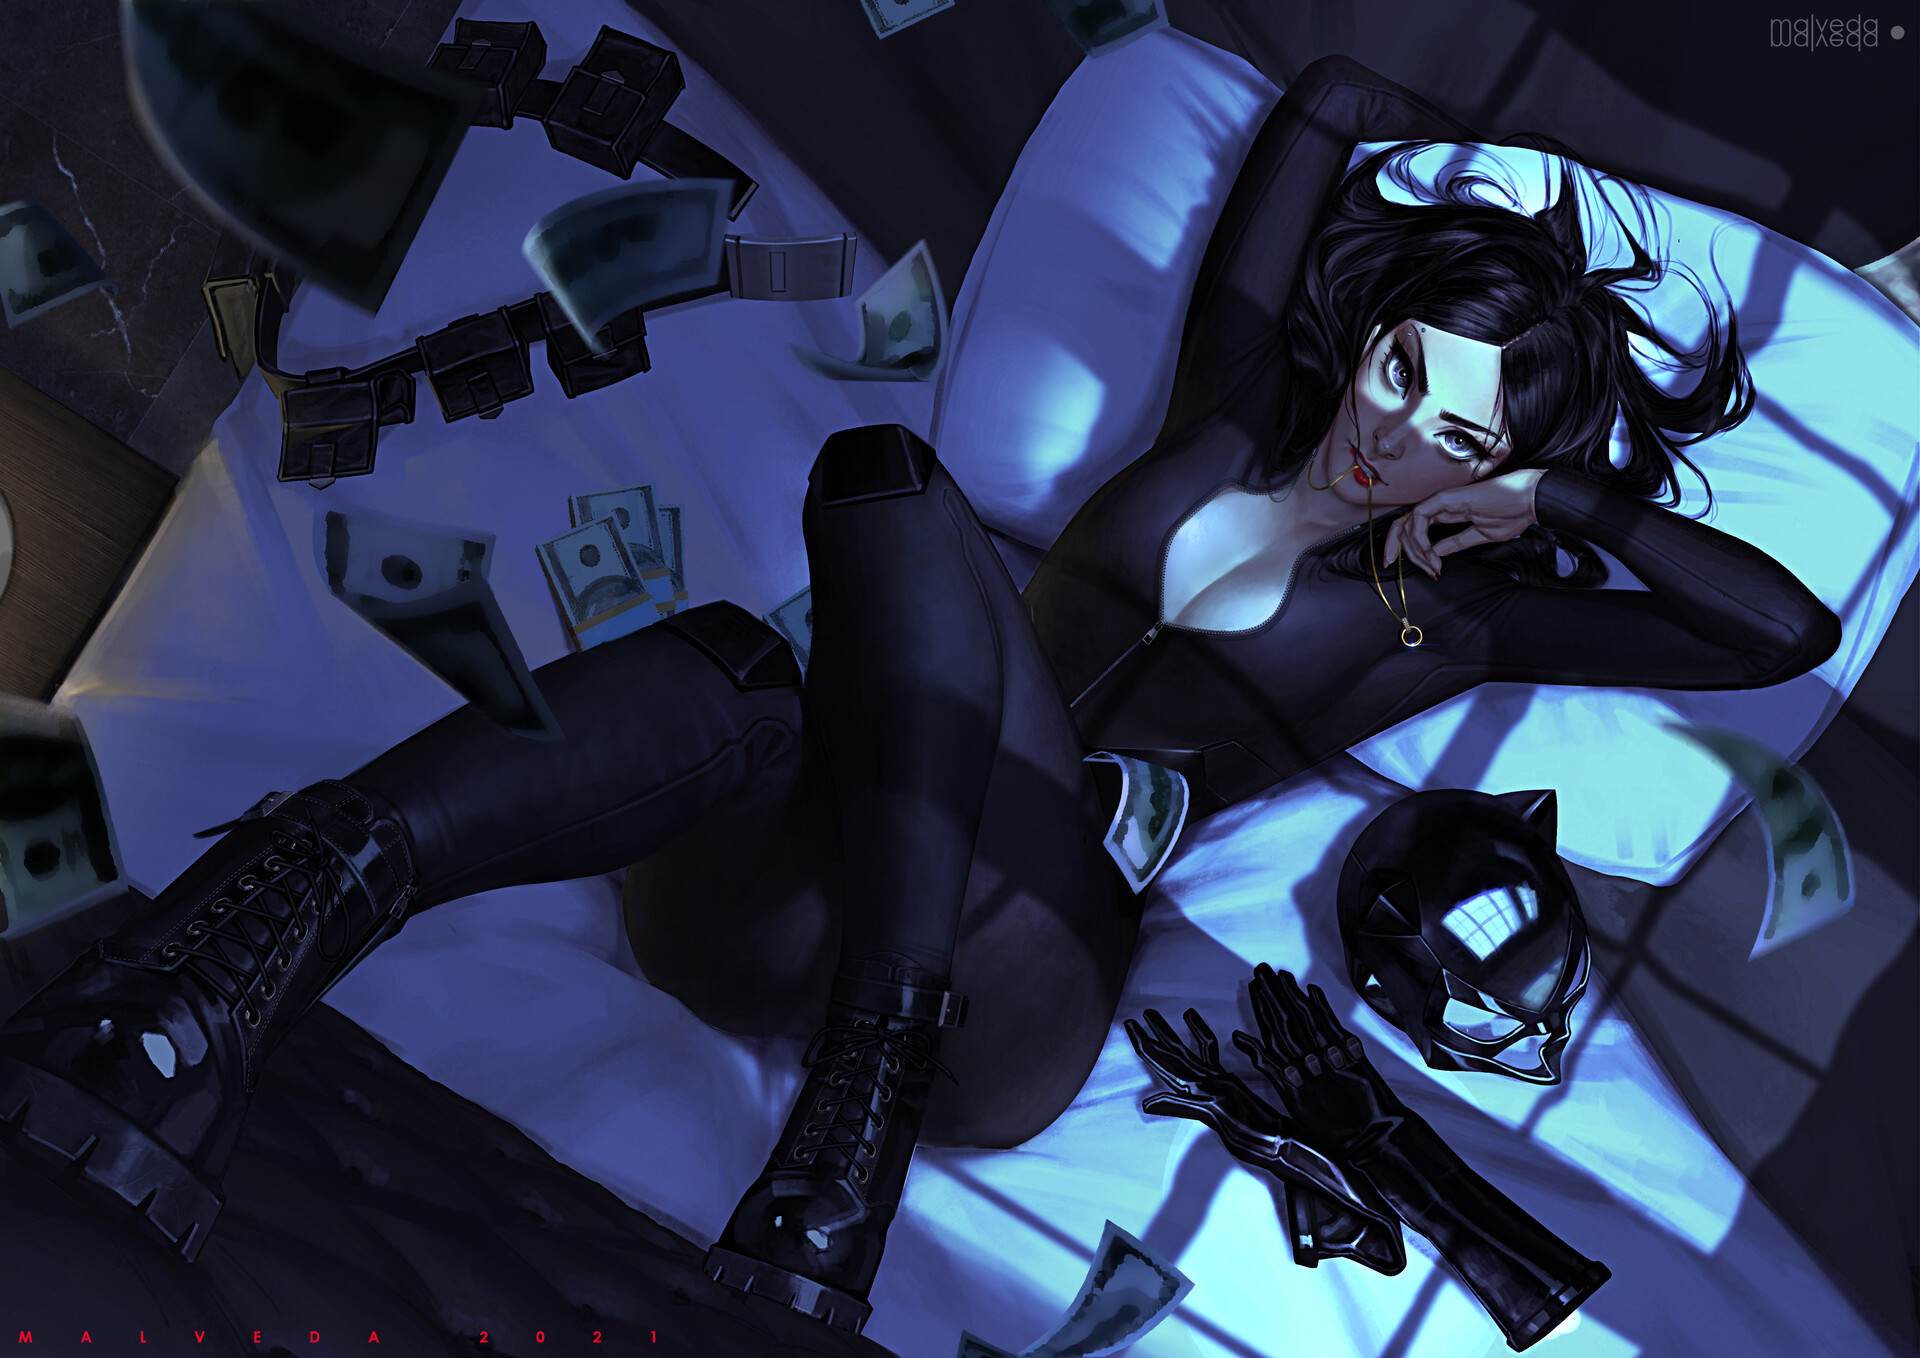 General 1920x1358 artwork women Catwoman Malveda (Artist) DC Comics money digital art watermarked 2021 (year)